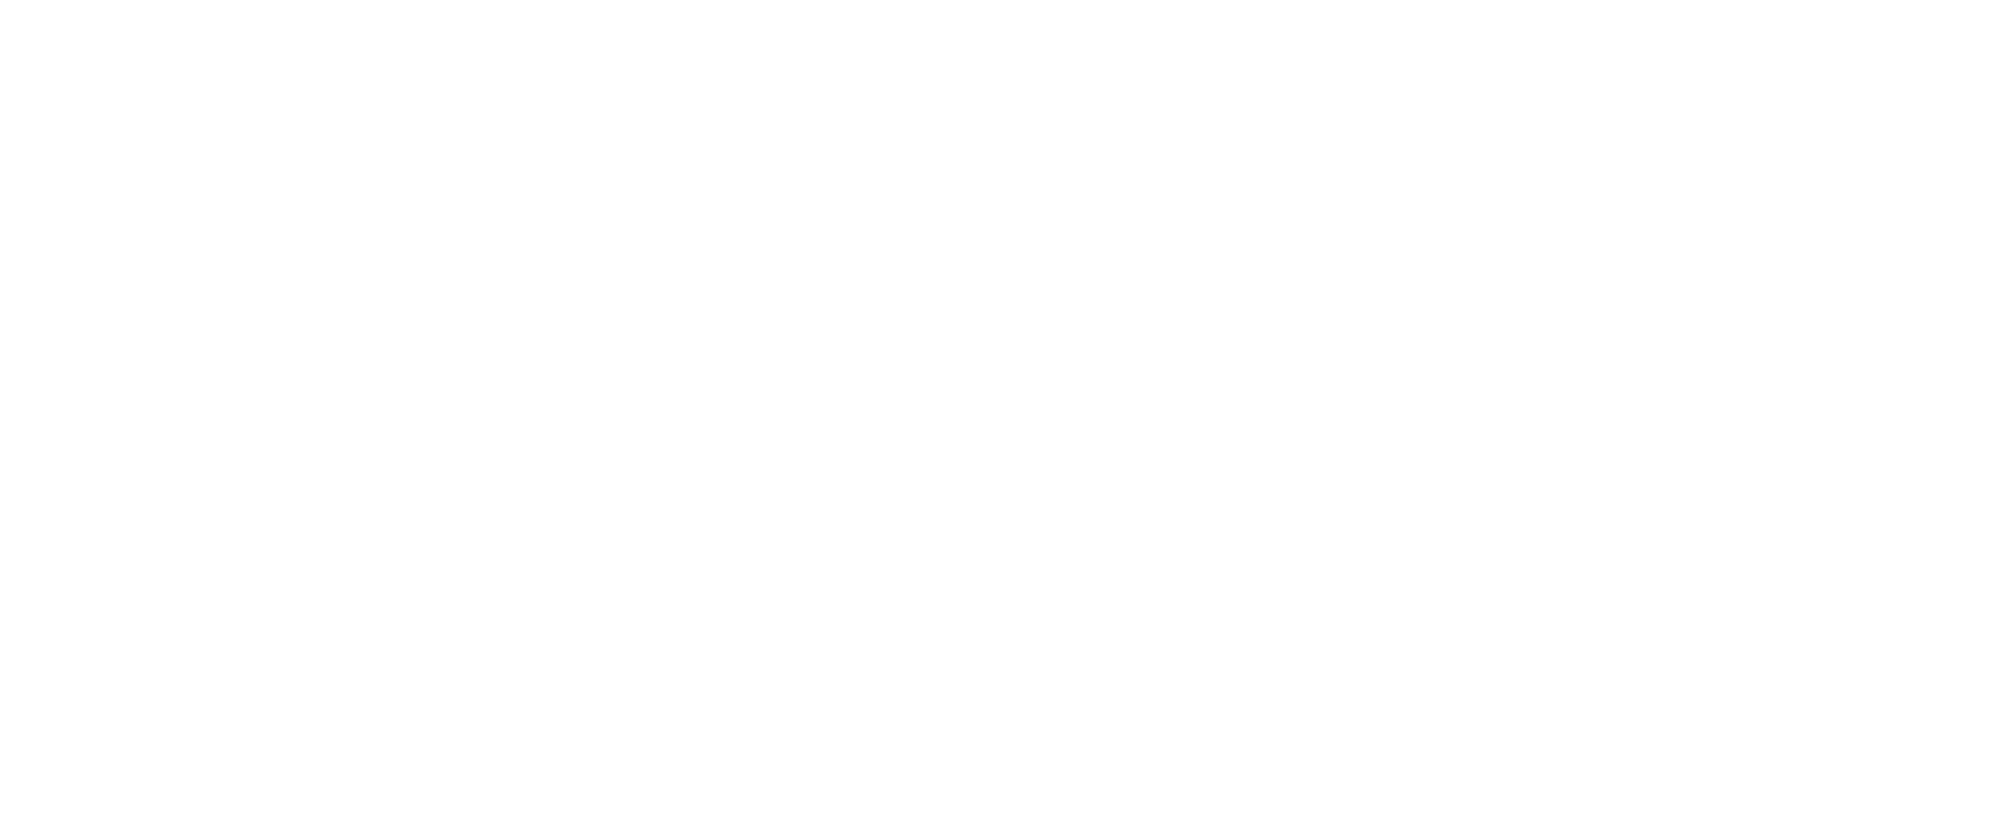 Urban Devotion Birmingham